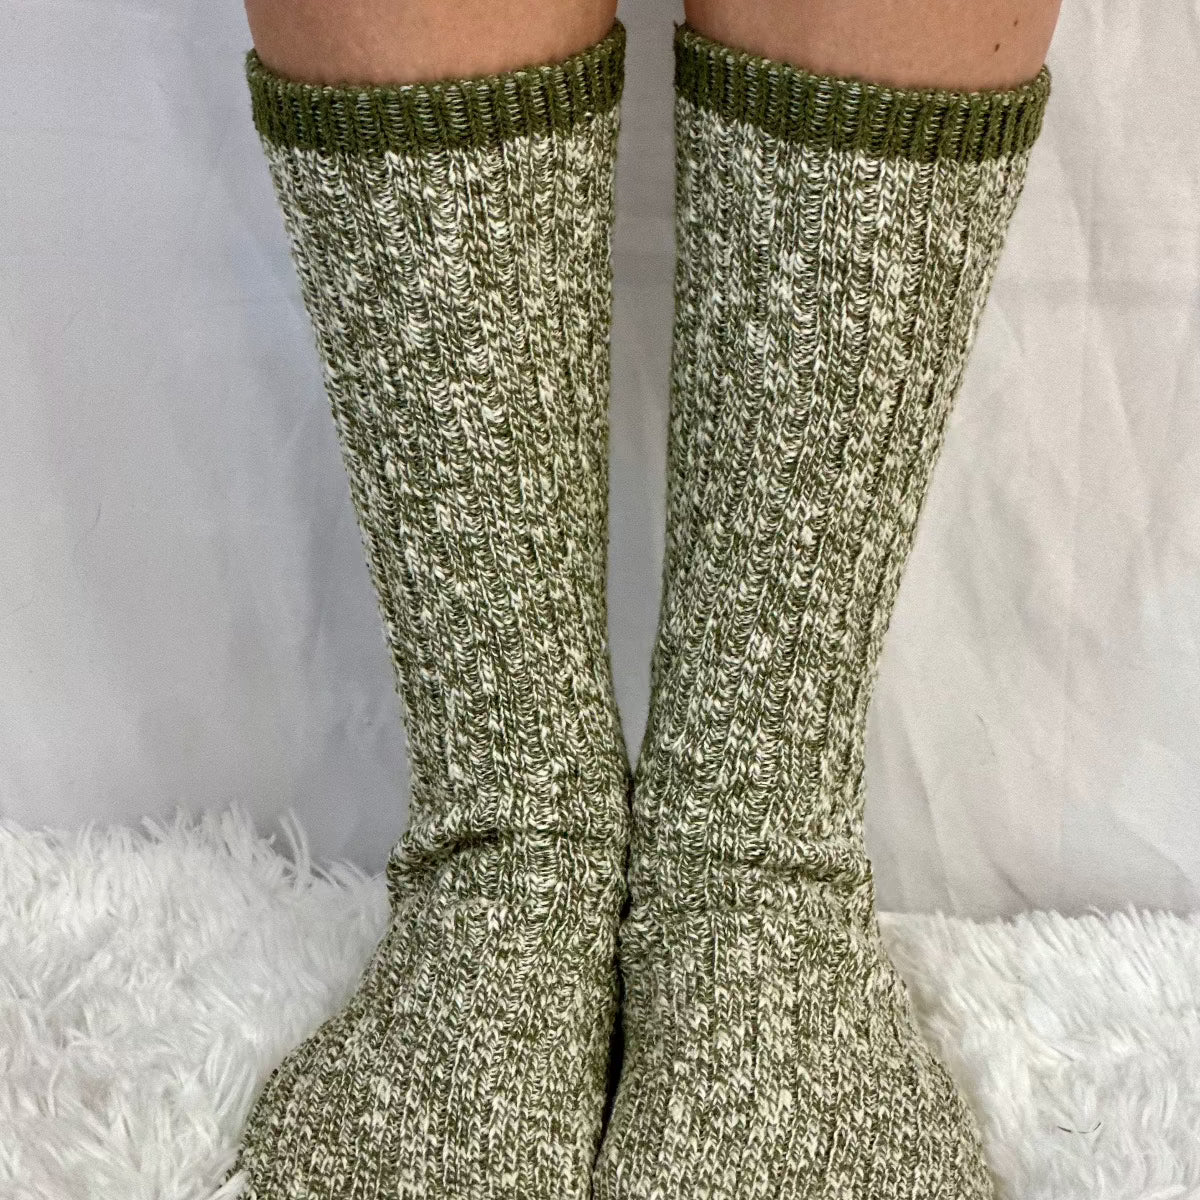 olive ankle short boot socks, crew short boot socks, usa made, cute fashion socks